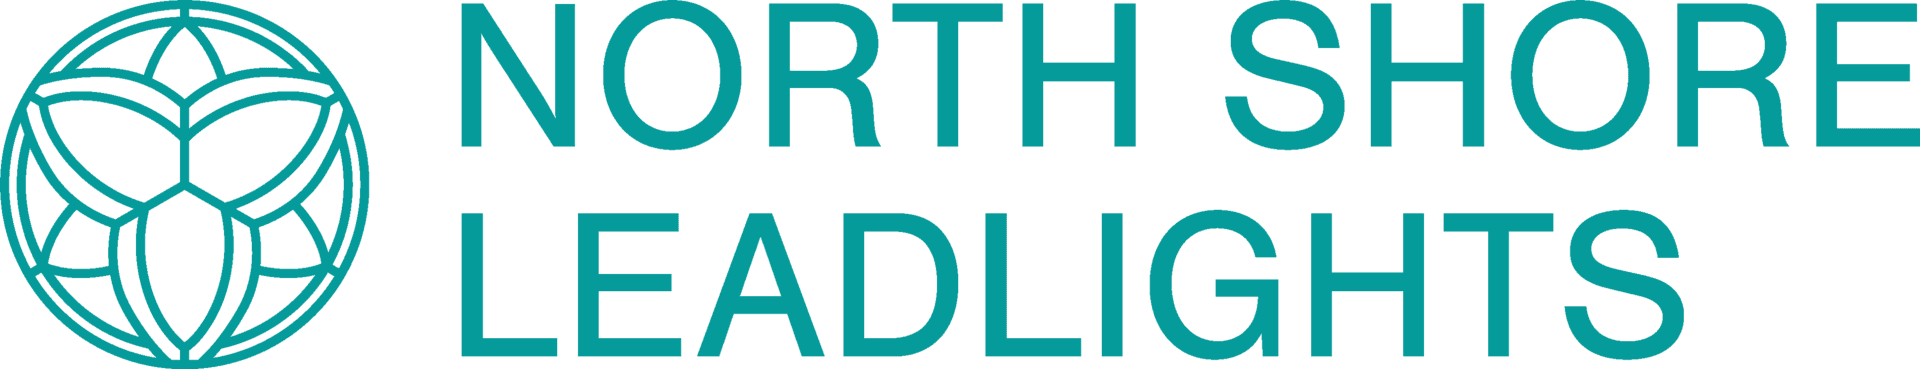 north shore leadlights logo